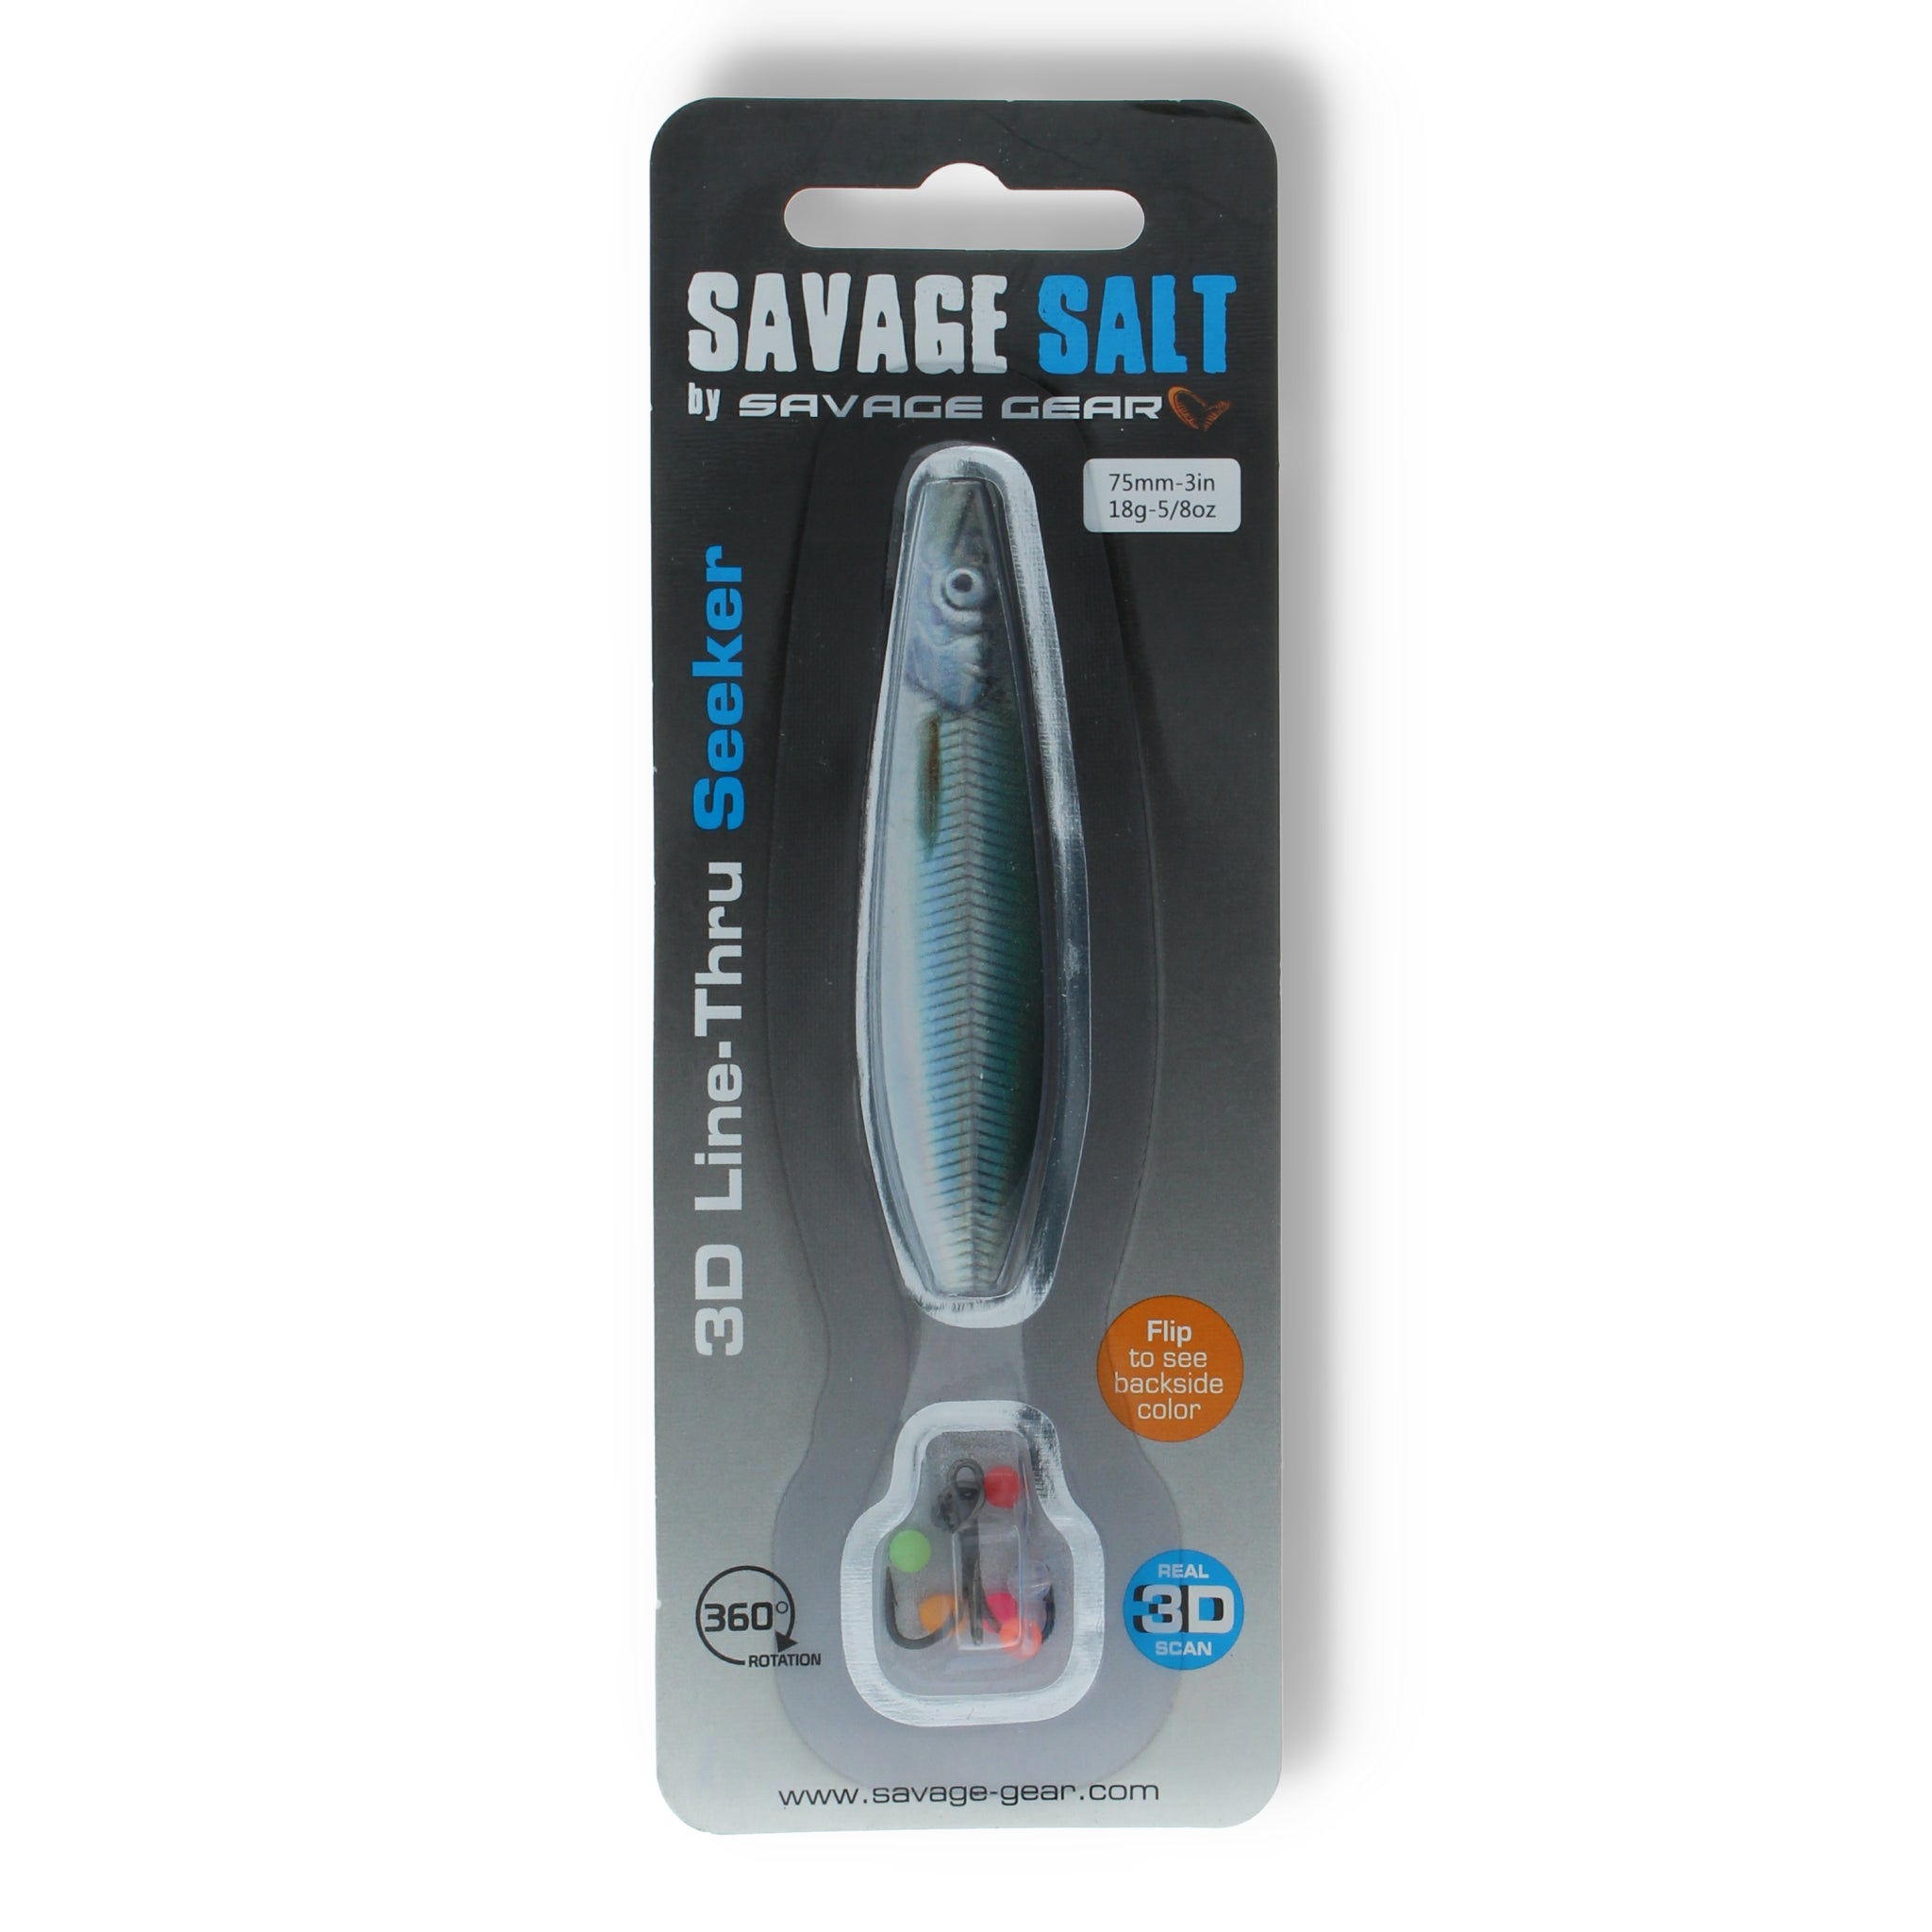 Savage Gear Savage Salt 3D Line-Thru Seeker 3"